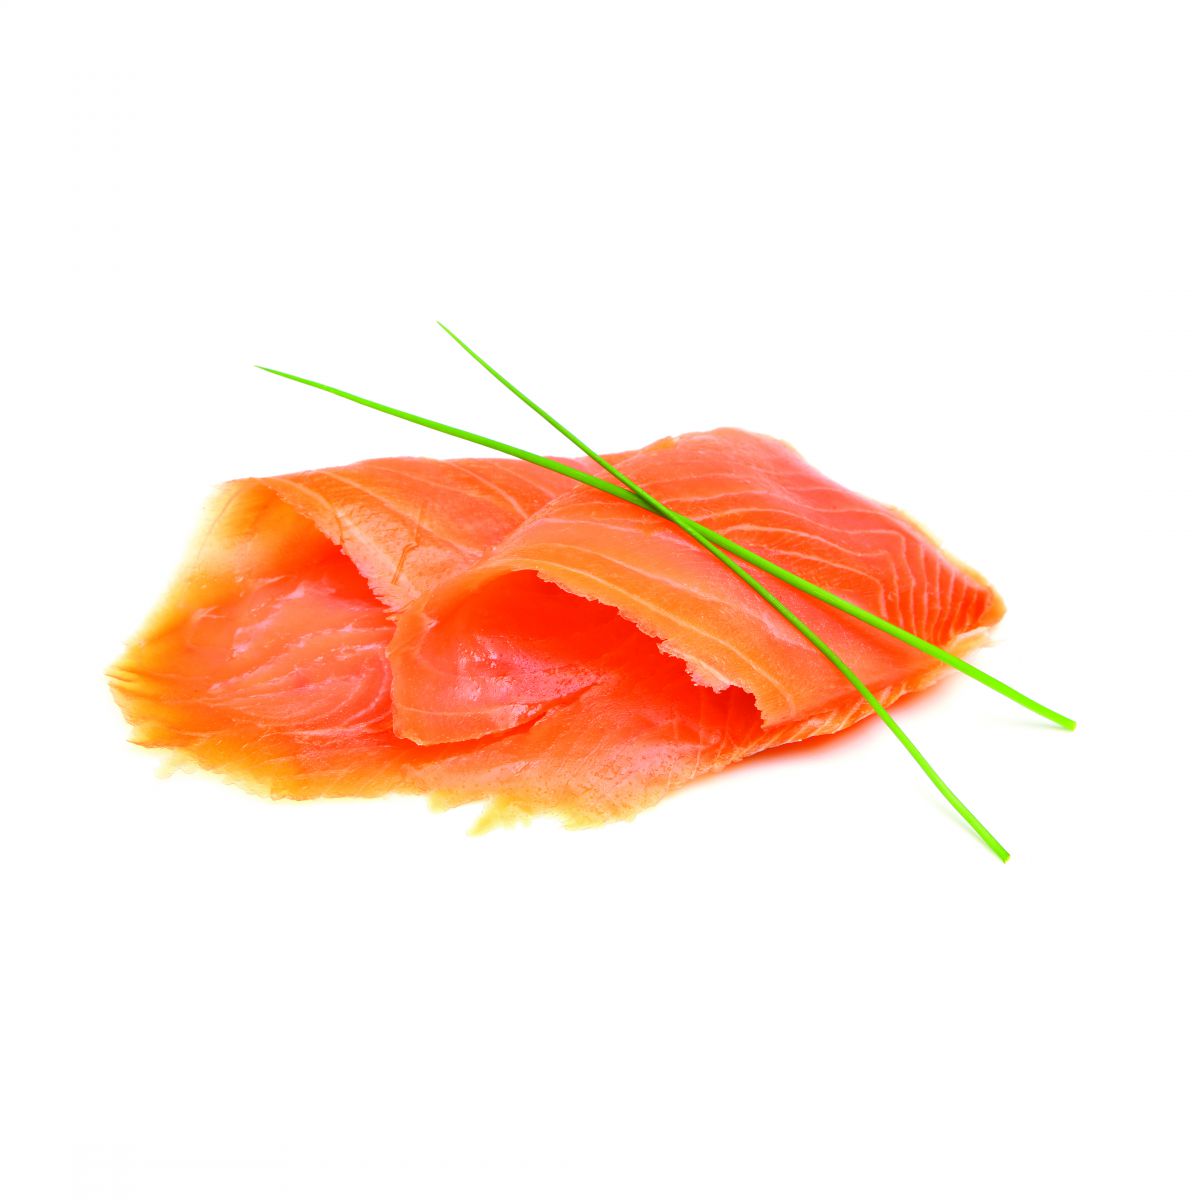 Acme Smoked Fish Pre Sliced Nova Salmon 2.5 lb